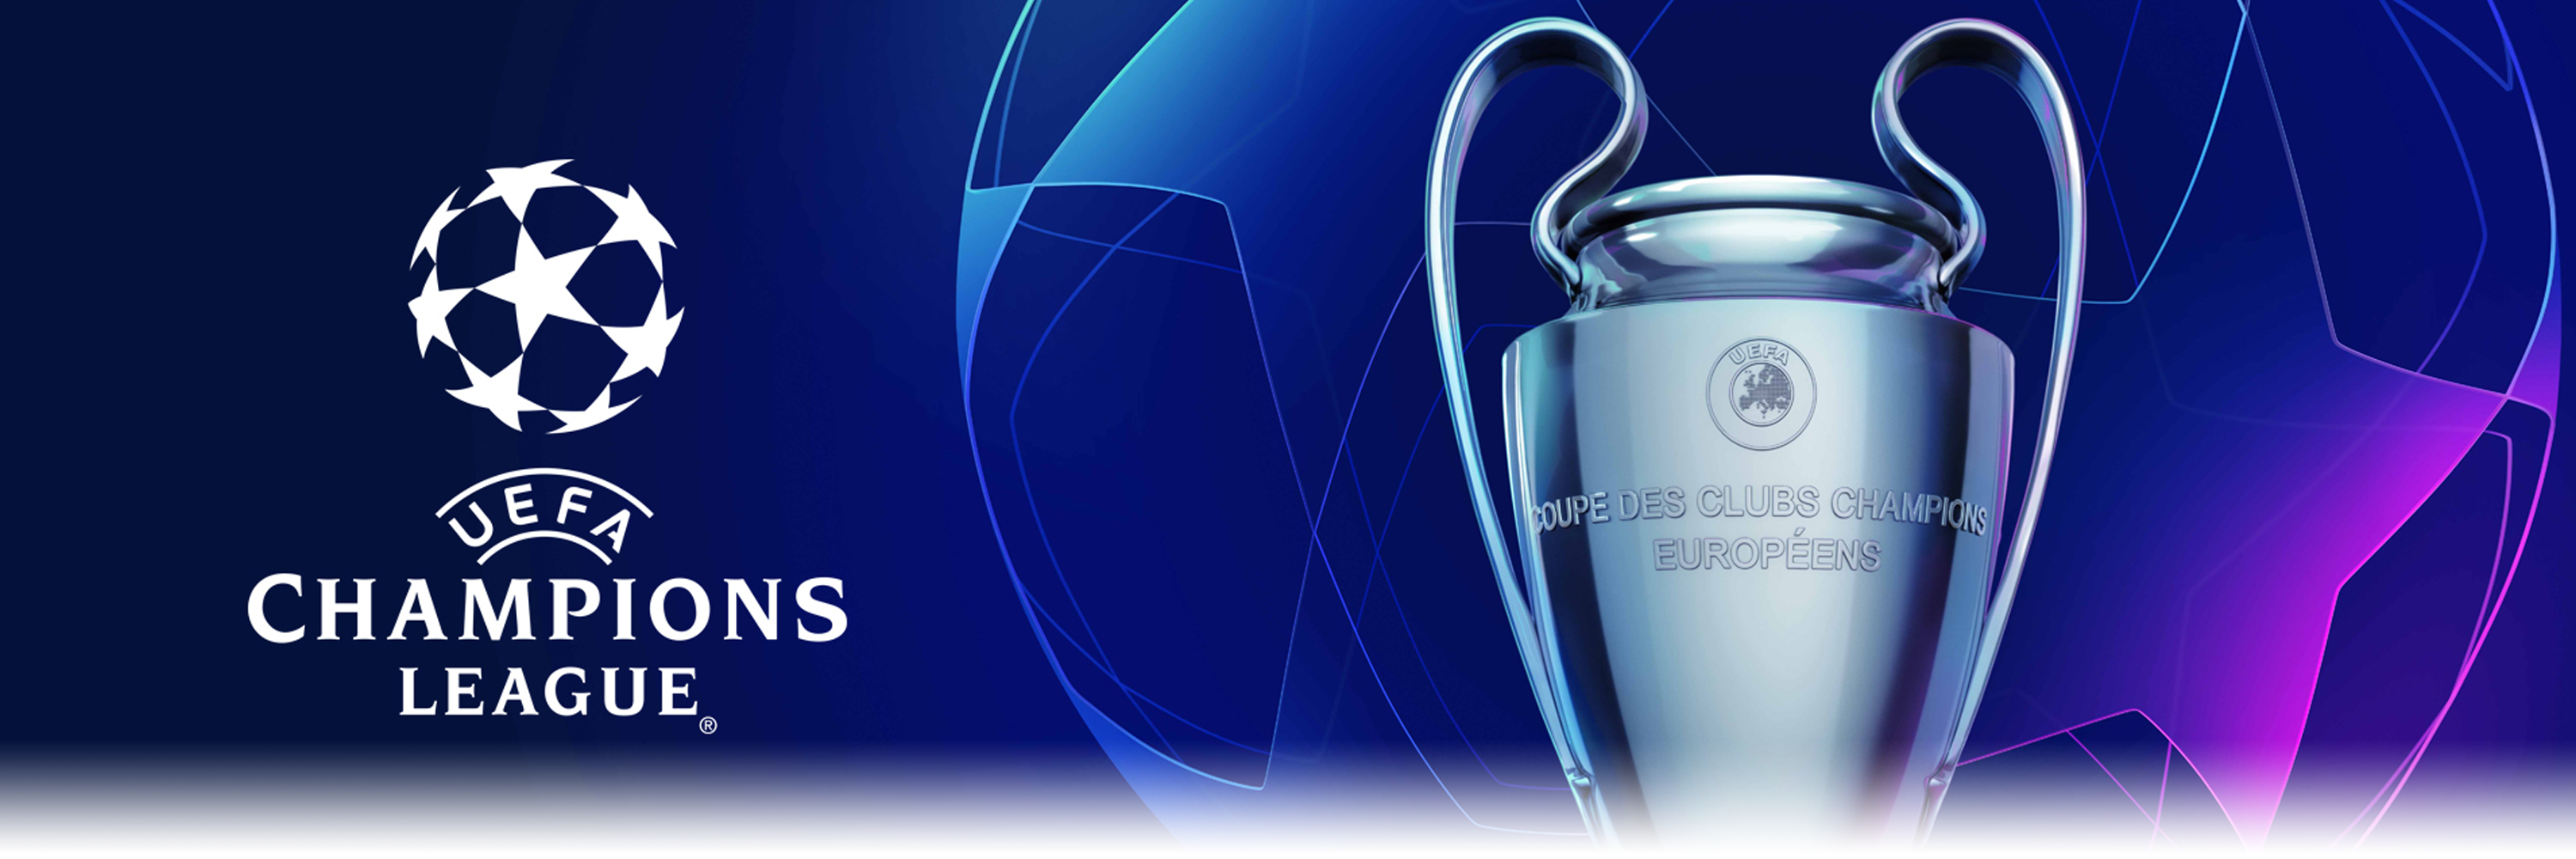 UEFA Champions' League